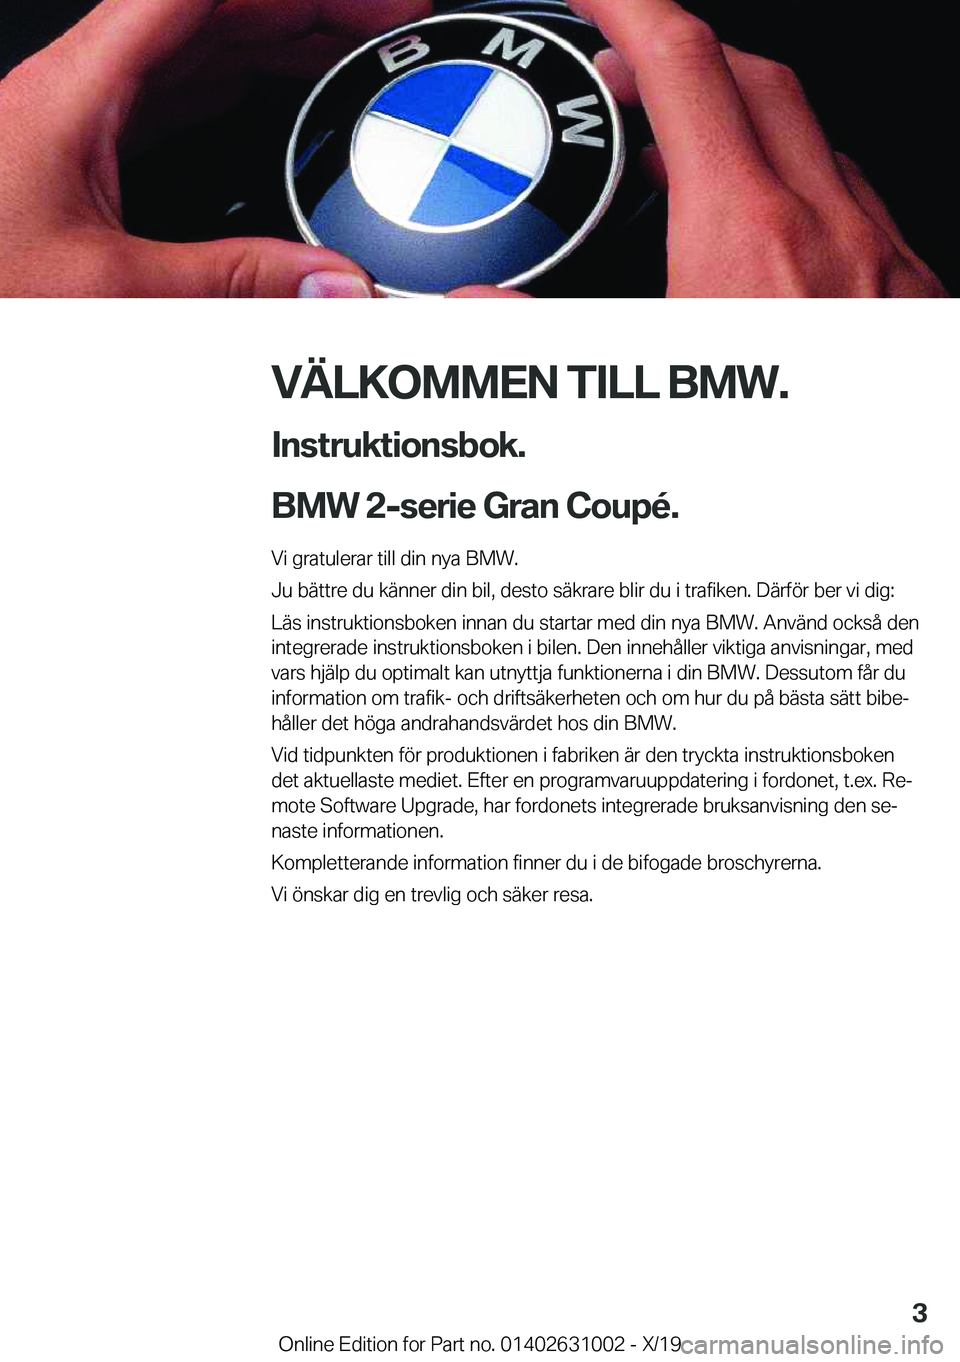 BMW 2 SERIES GRAN COUPE 2020  InstruktionsbÖcker (in Swedish) �V�Ä�L�K�O�M�M�E�N��T�I�L�L��B�M�W�.�I�n�s�t�r�u�k�t�i�o�n�s�b�o�k�.
�B�M�W��2�-�s�e�r�i�e��G�r�a�n��C�o�u�p�